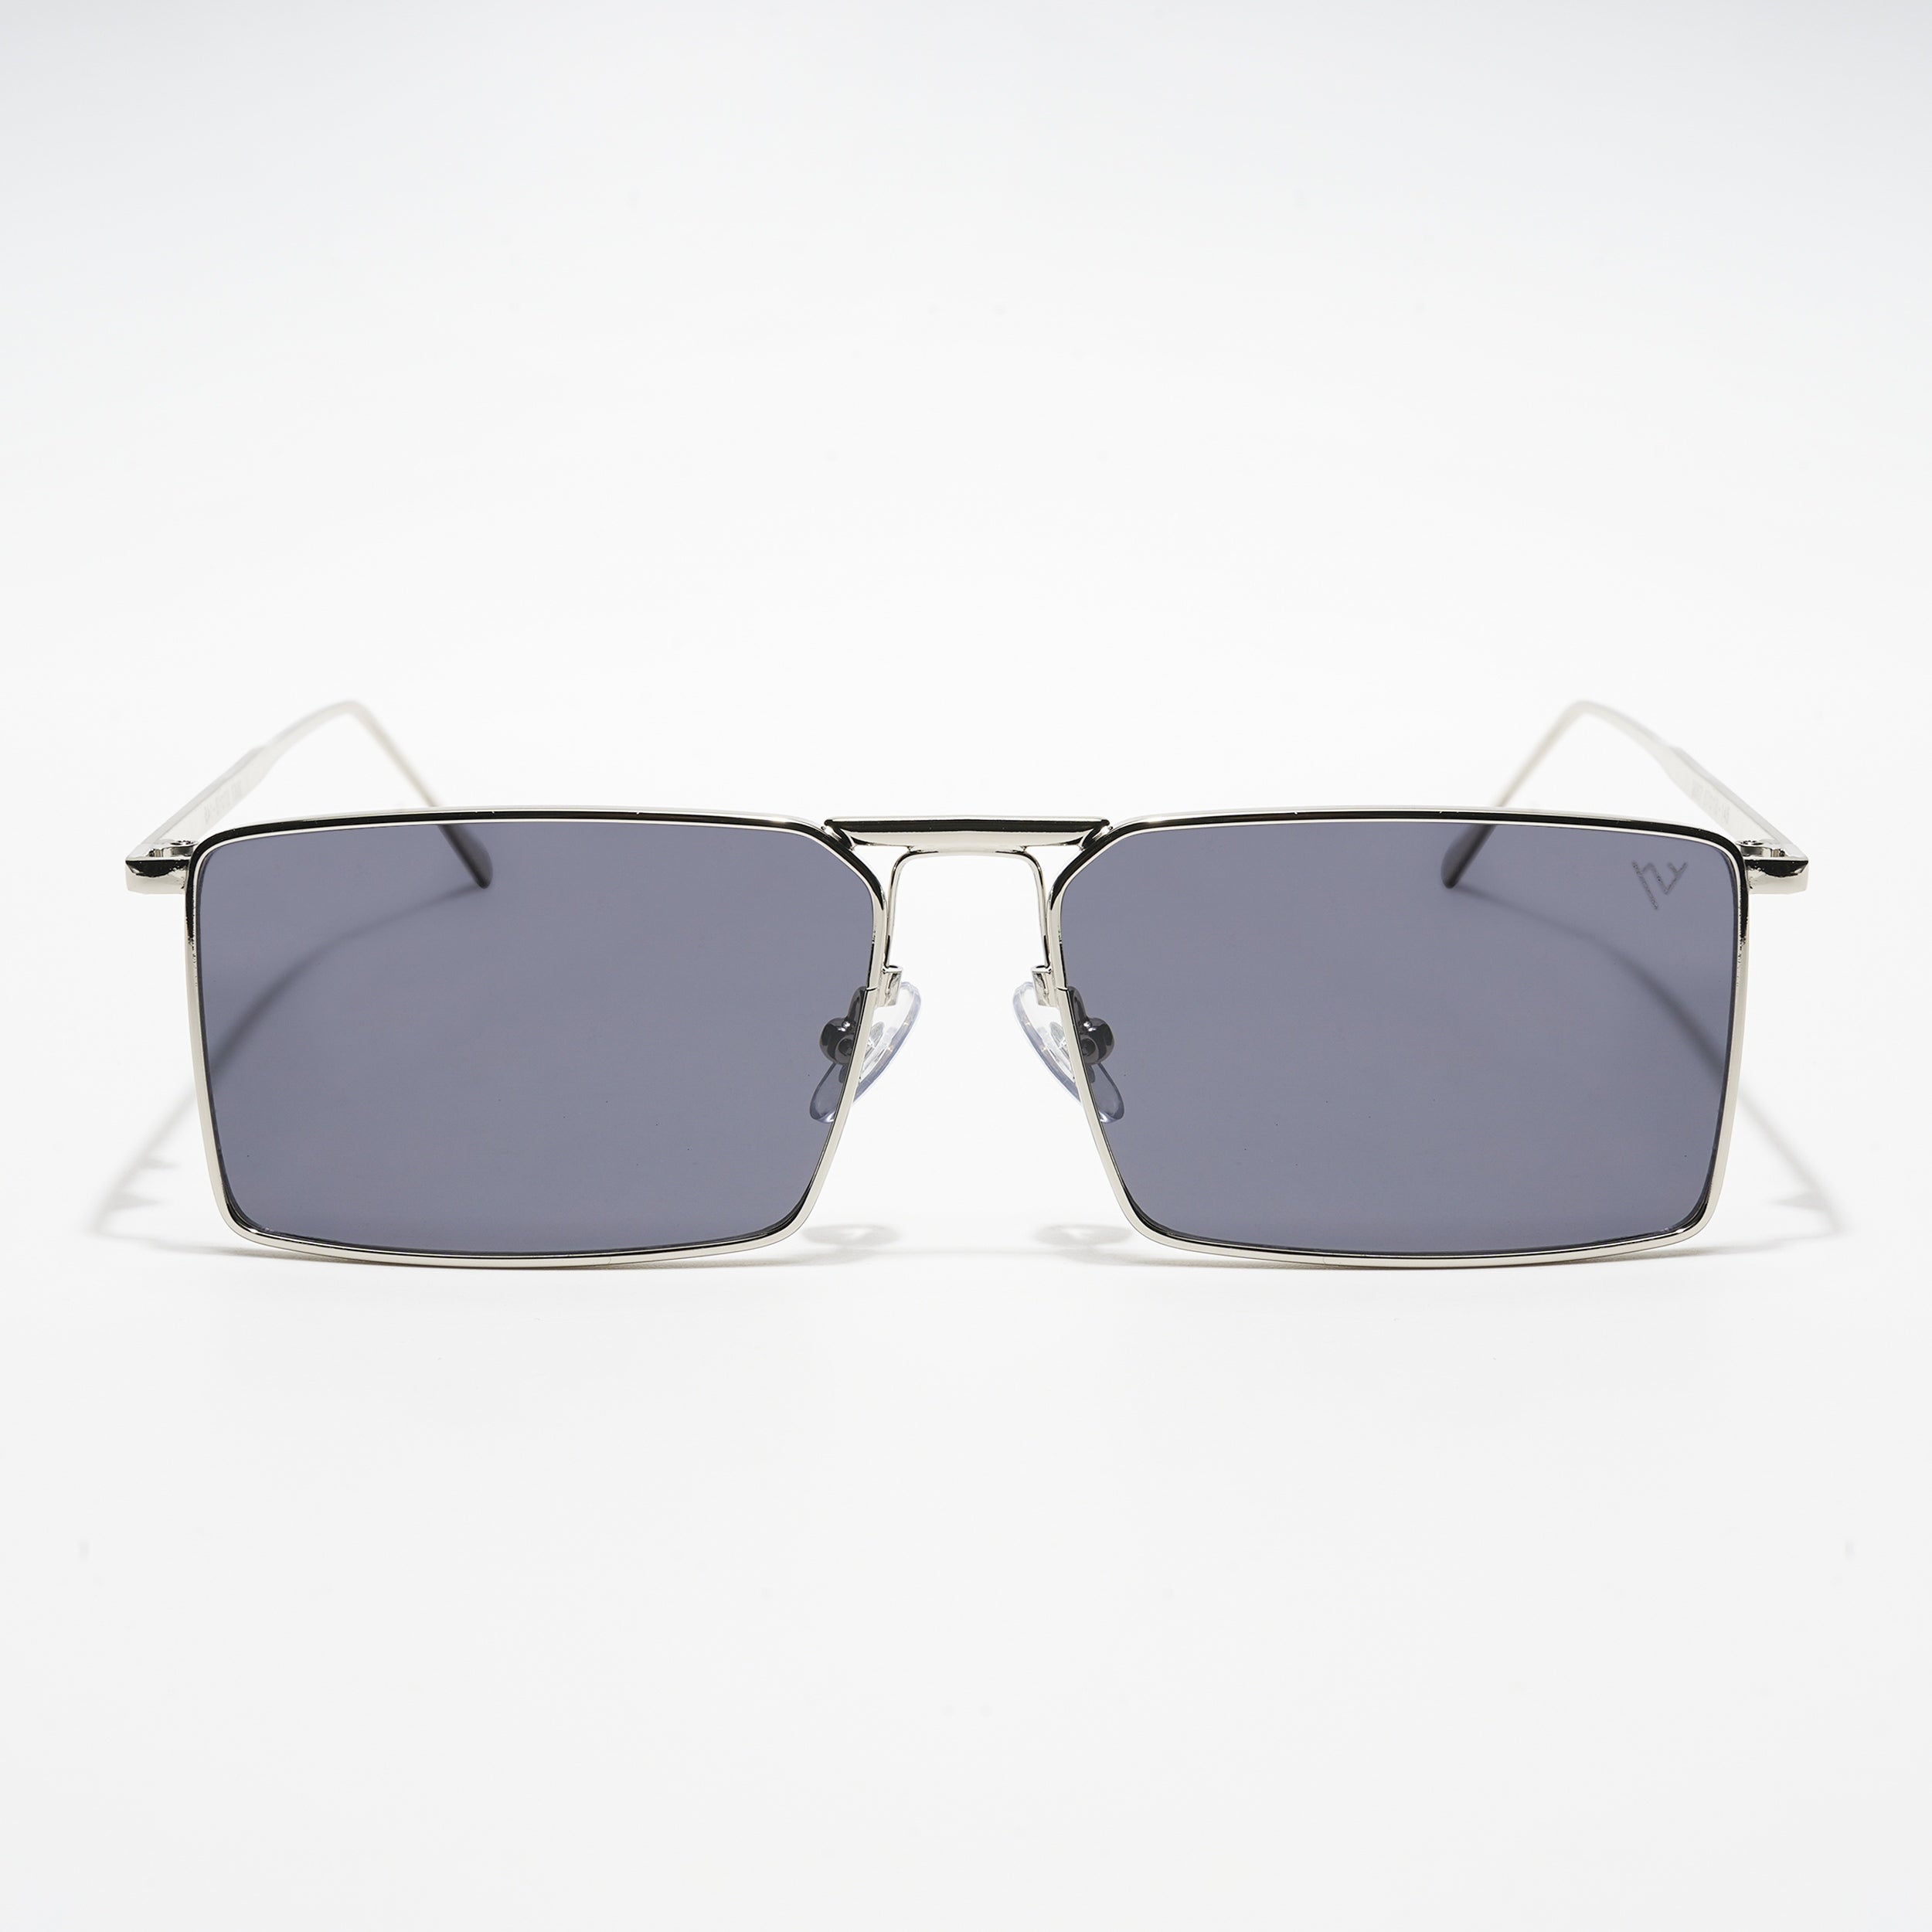 Voyage Silver Digger | Black & Silver Rectangular Sunglasses - MG3573